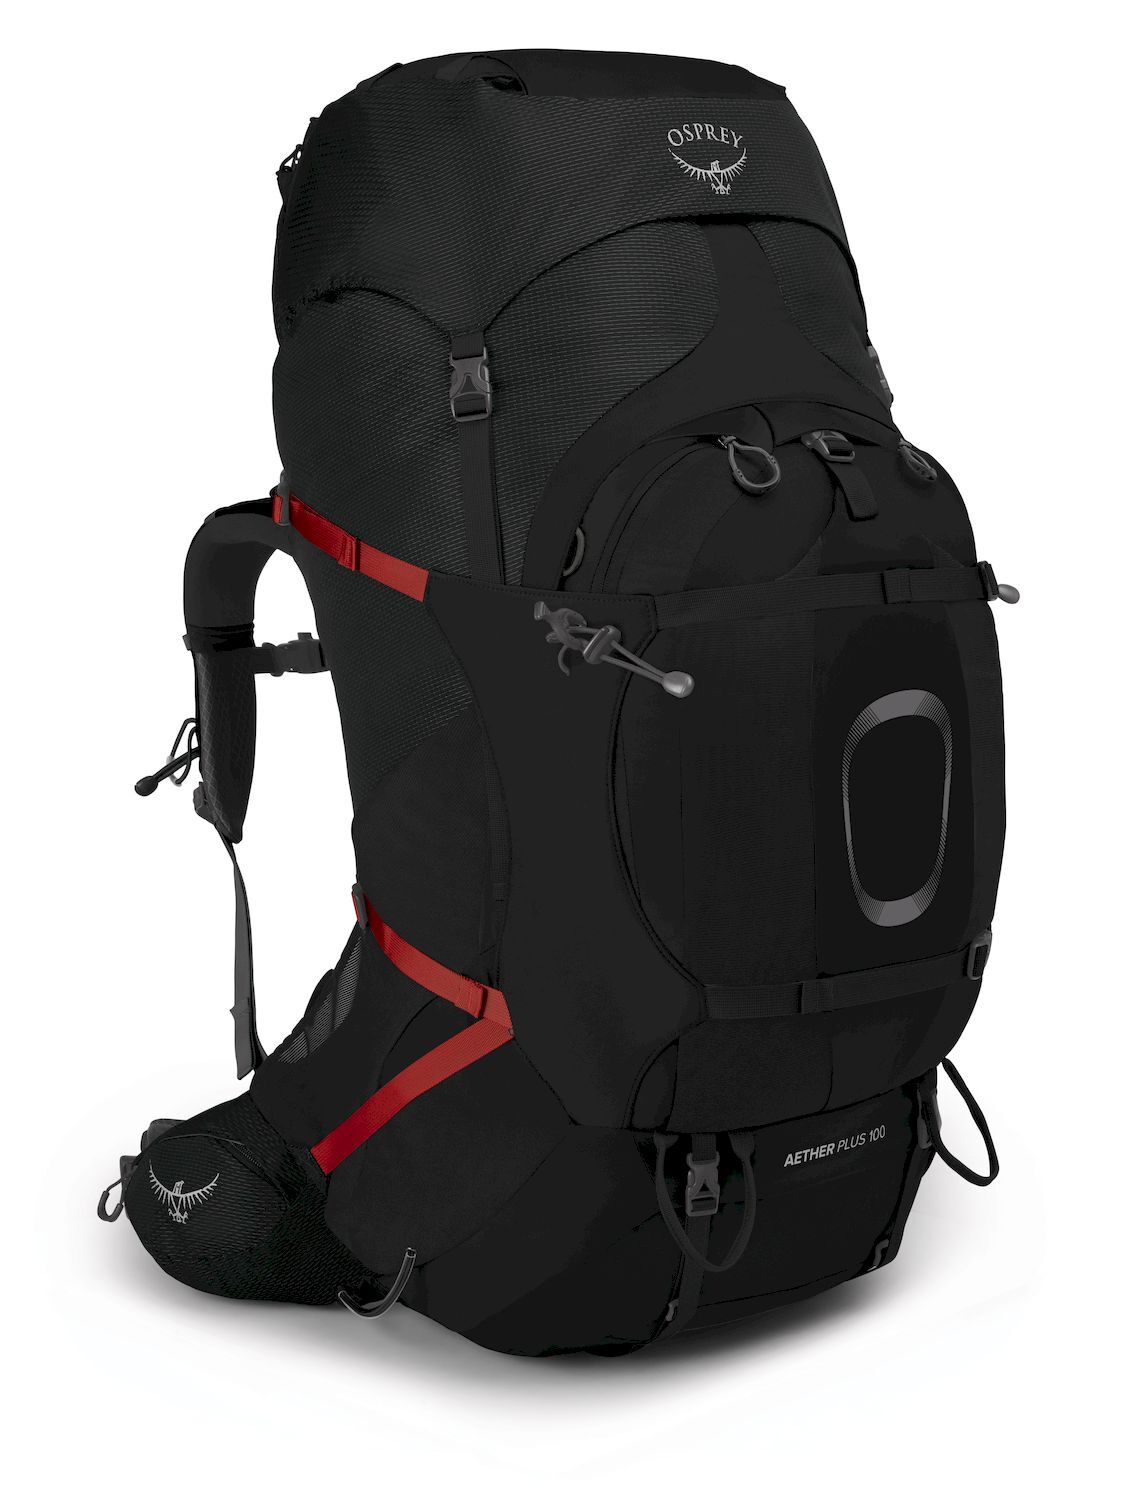 Osprey Aether Plus 100 - Hiking backpack - Men's